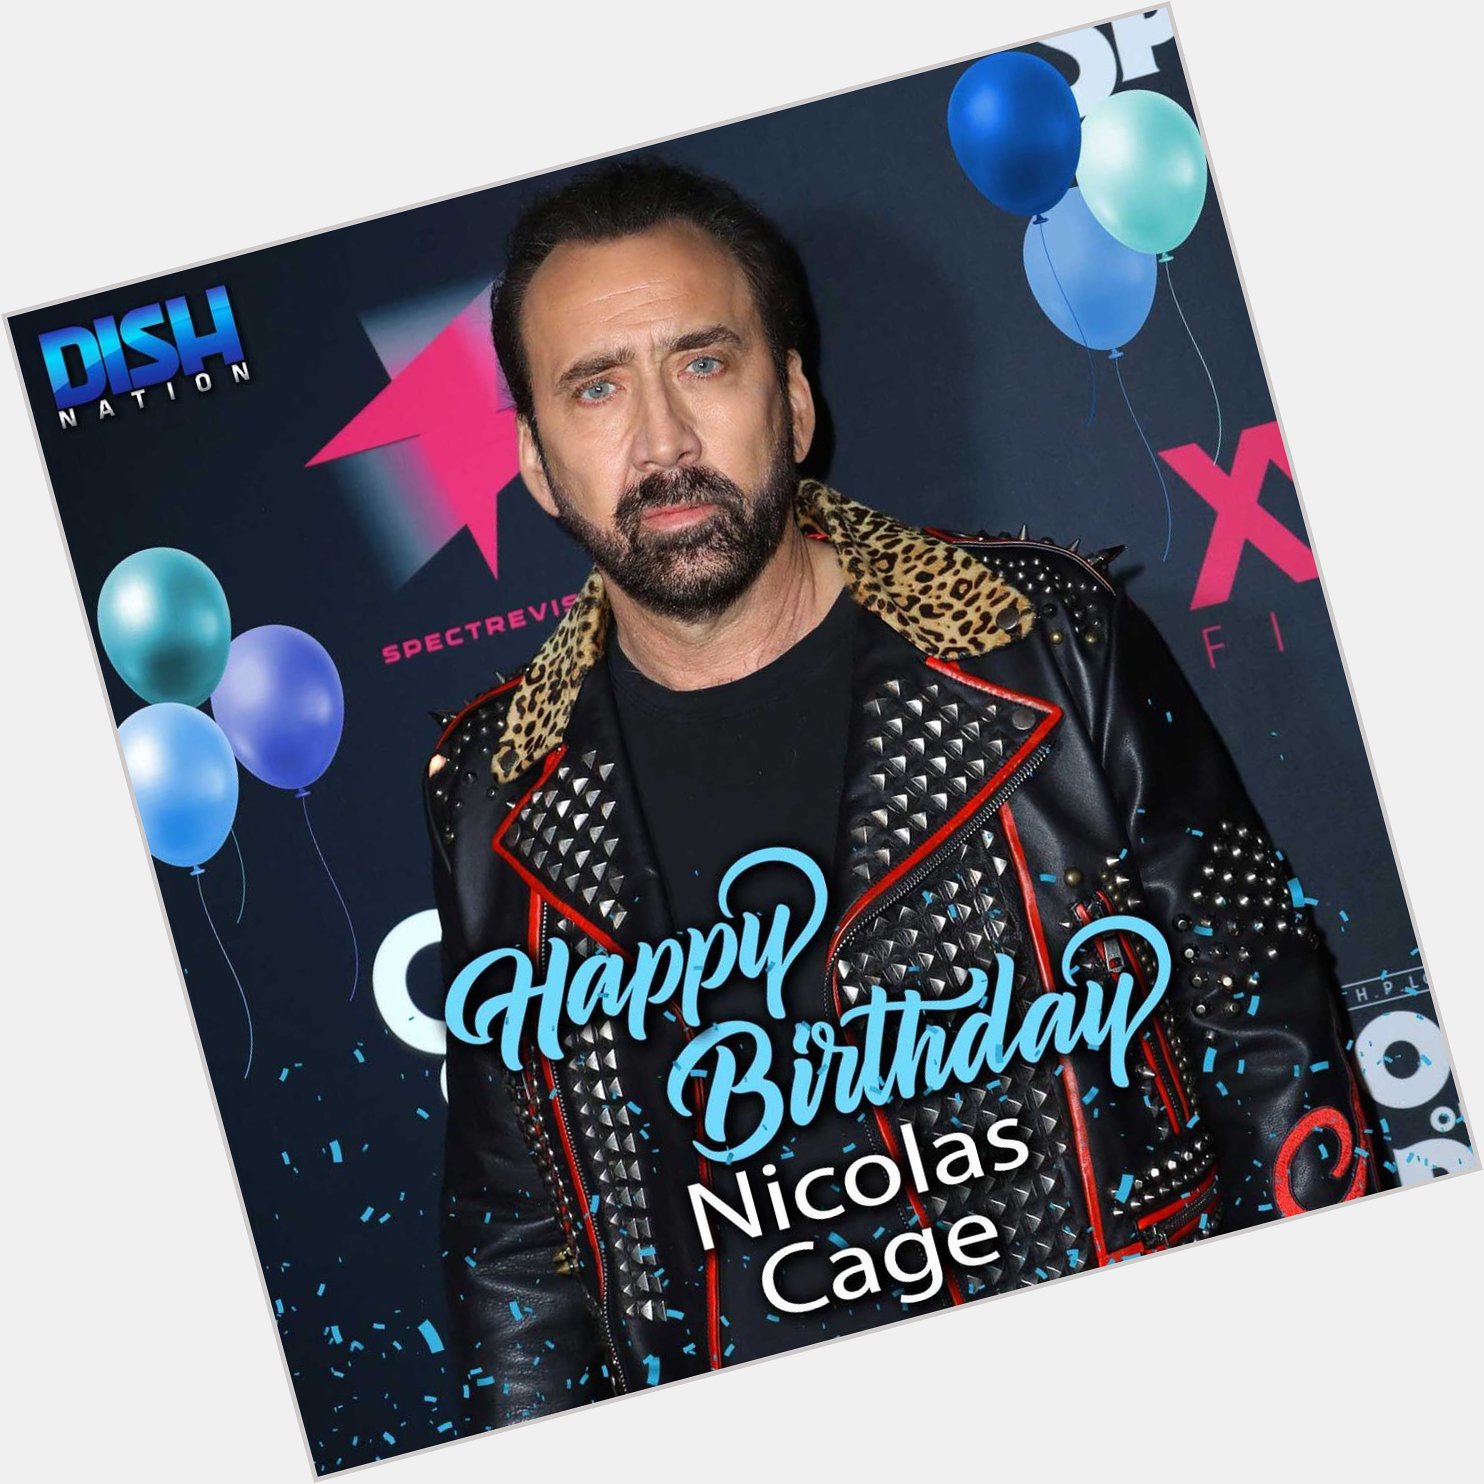 Wishing Nicolas Cage a very happy 57th  